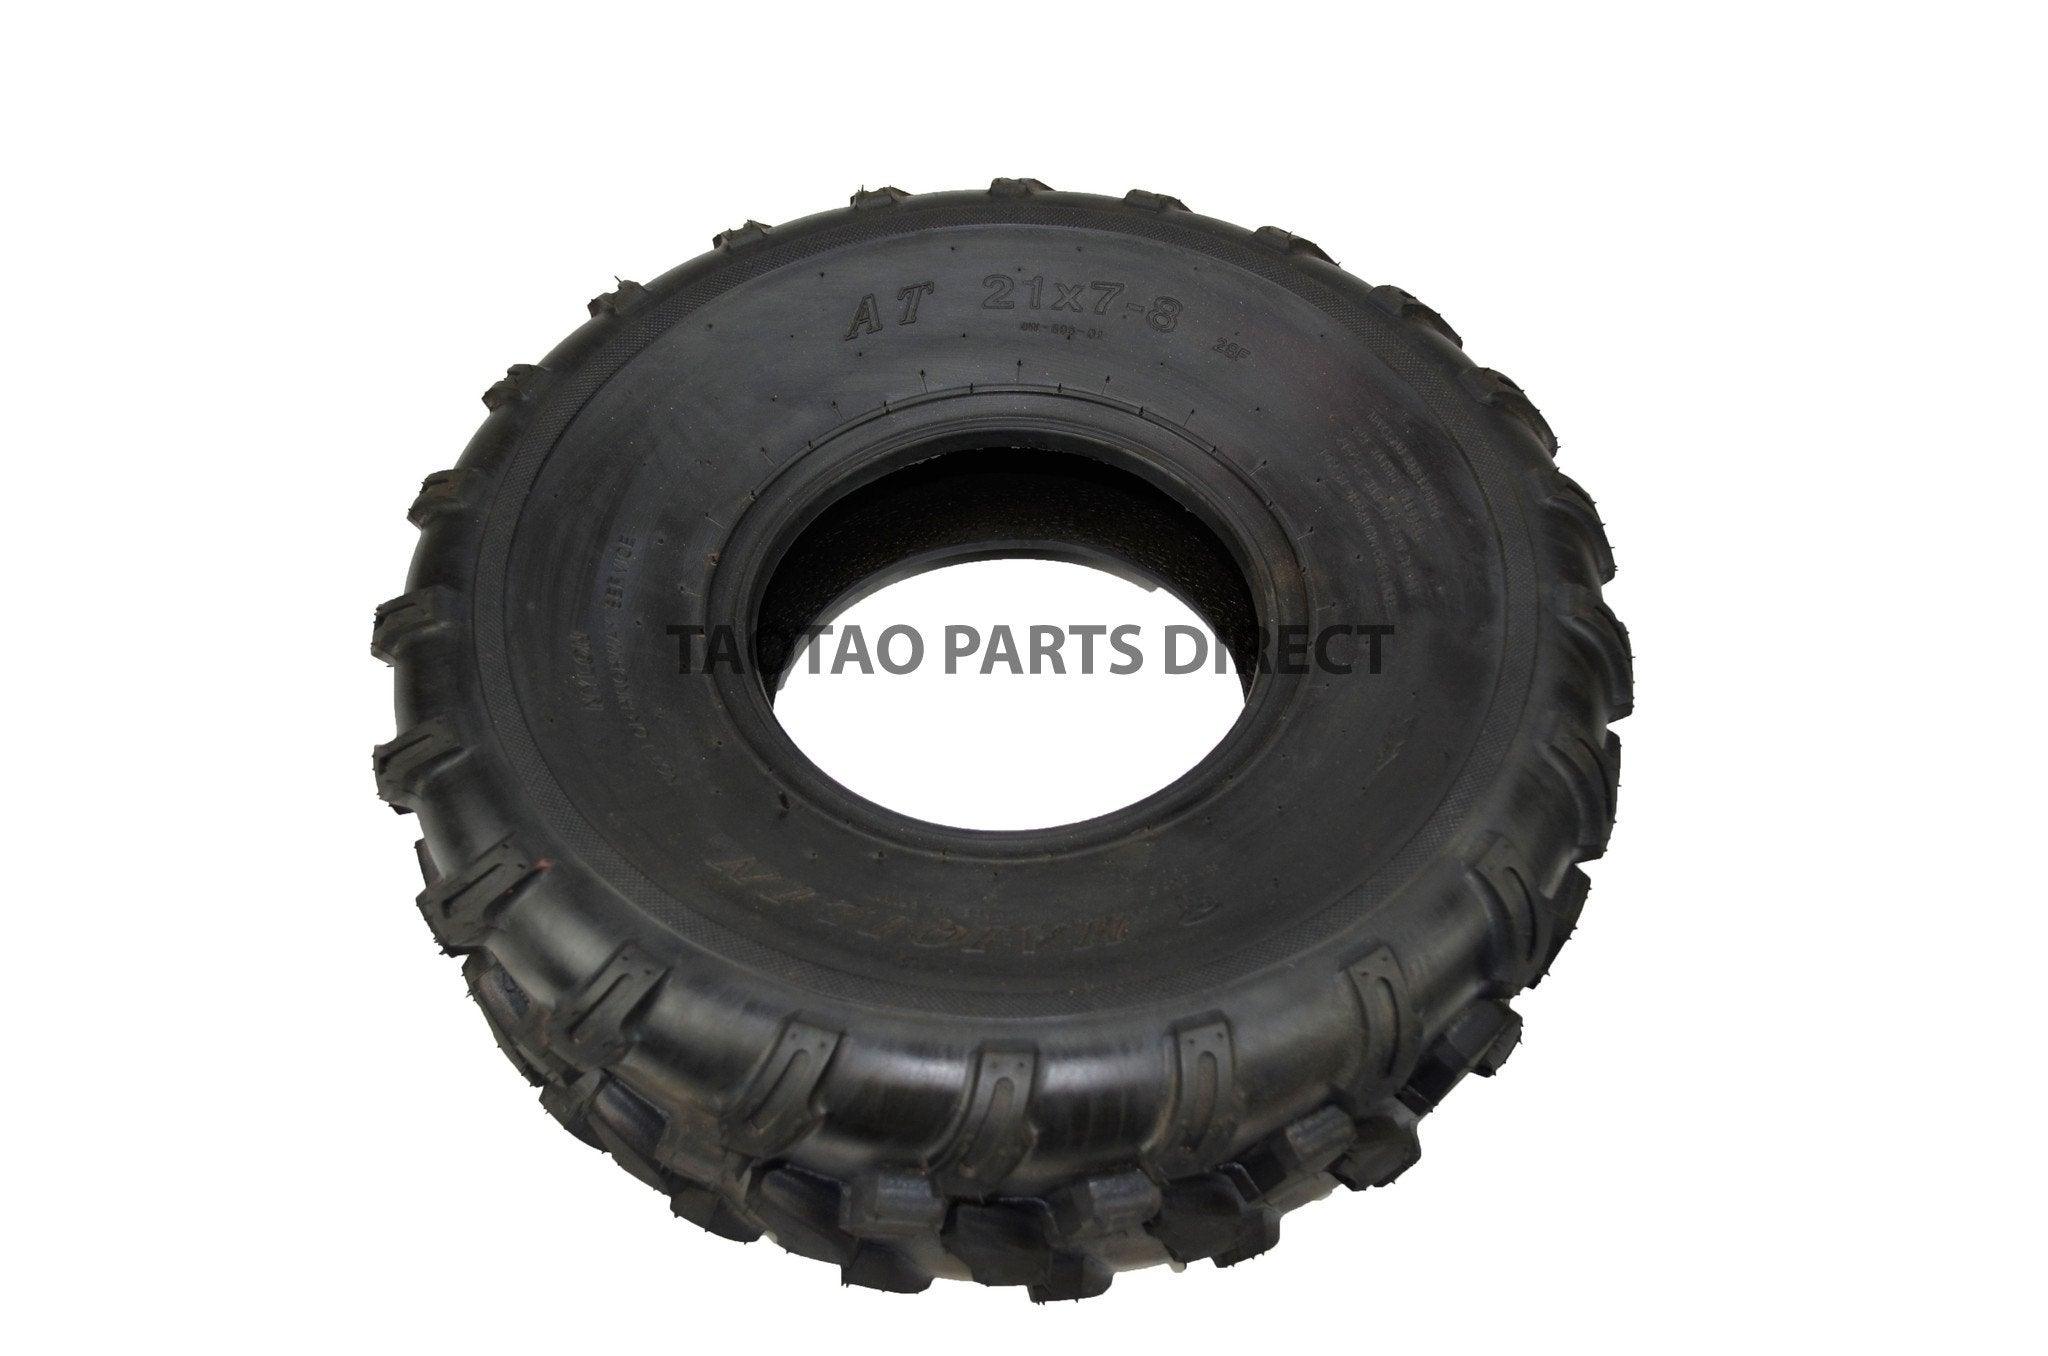 21x7-8 Tire - TaoTaoPartsDirect.com